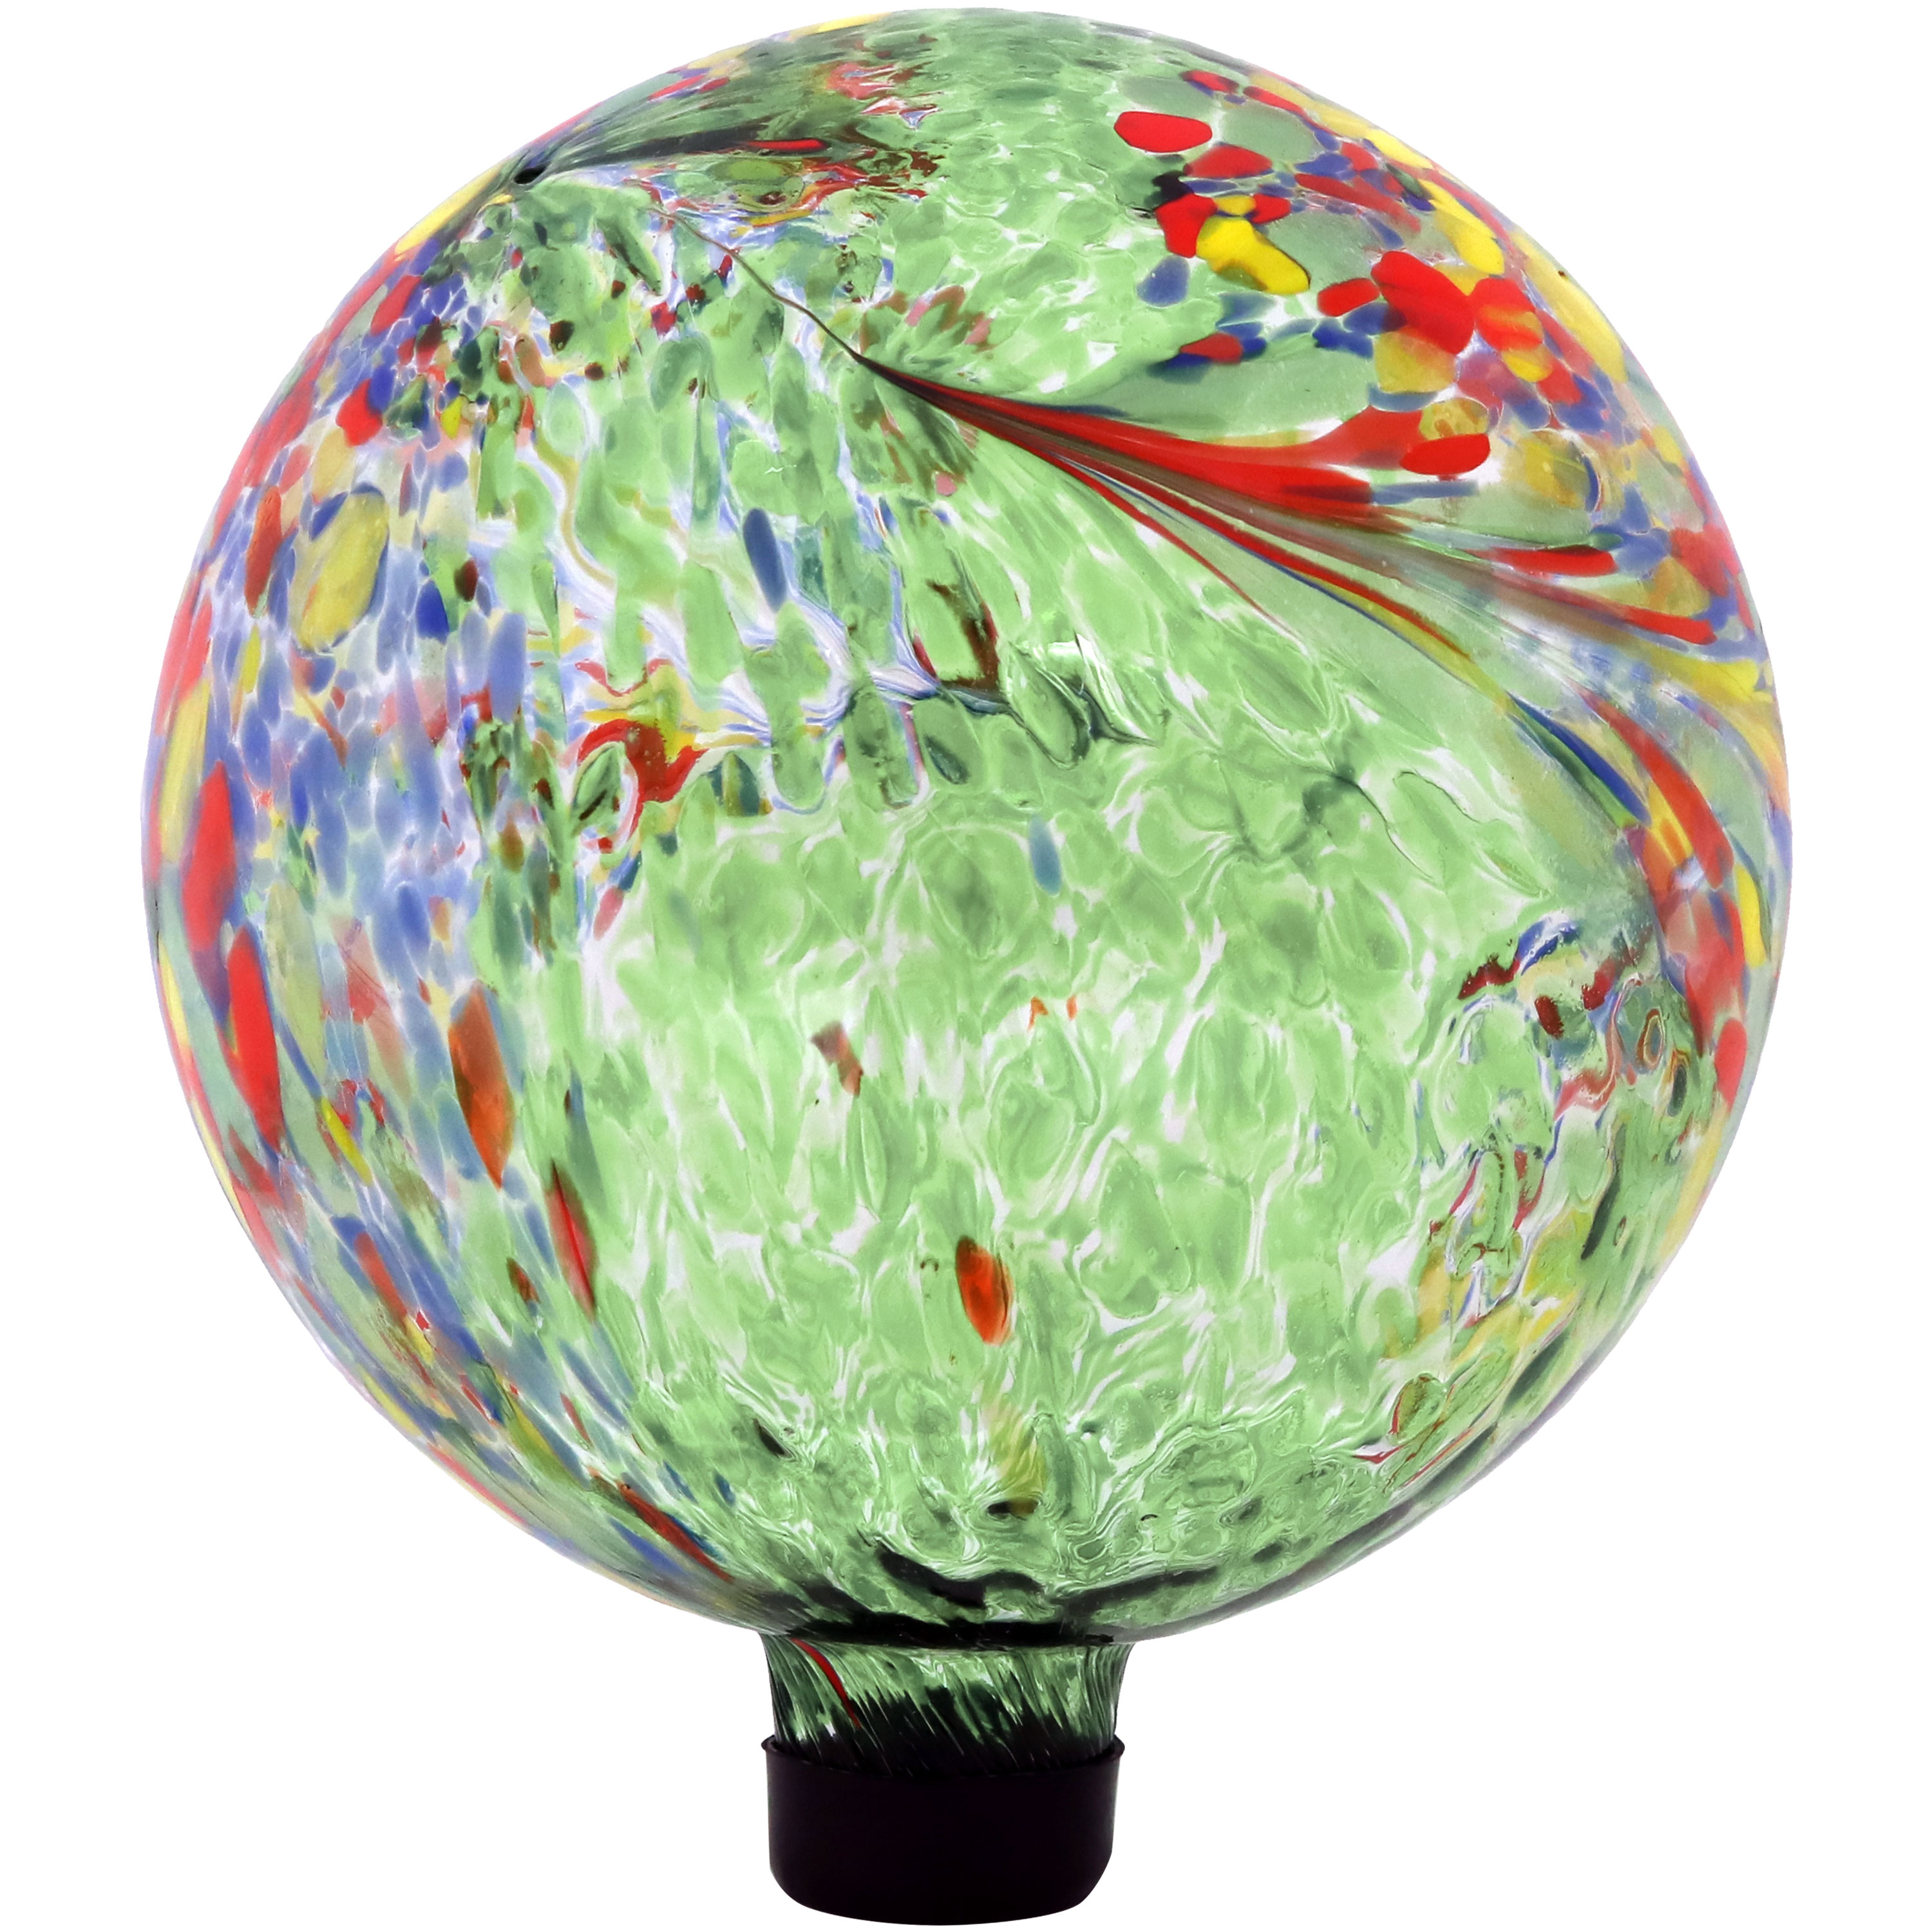 Sunnydaze Green Artistic Glass Gazing Ball Globe - 10-Inch